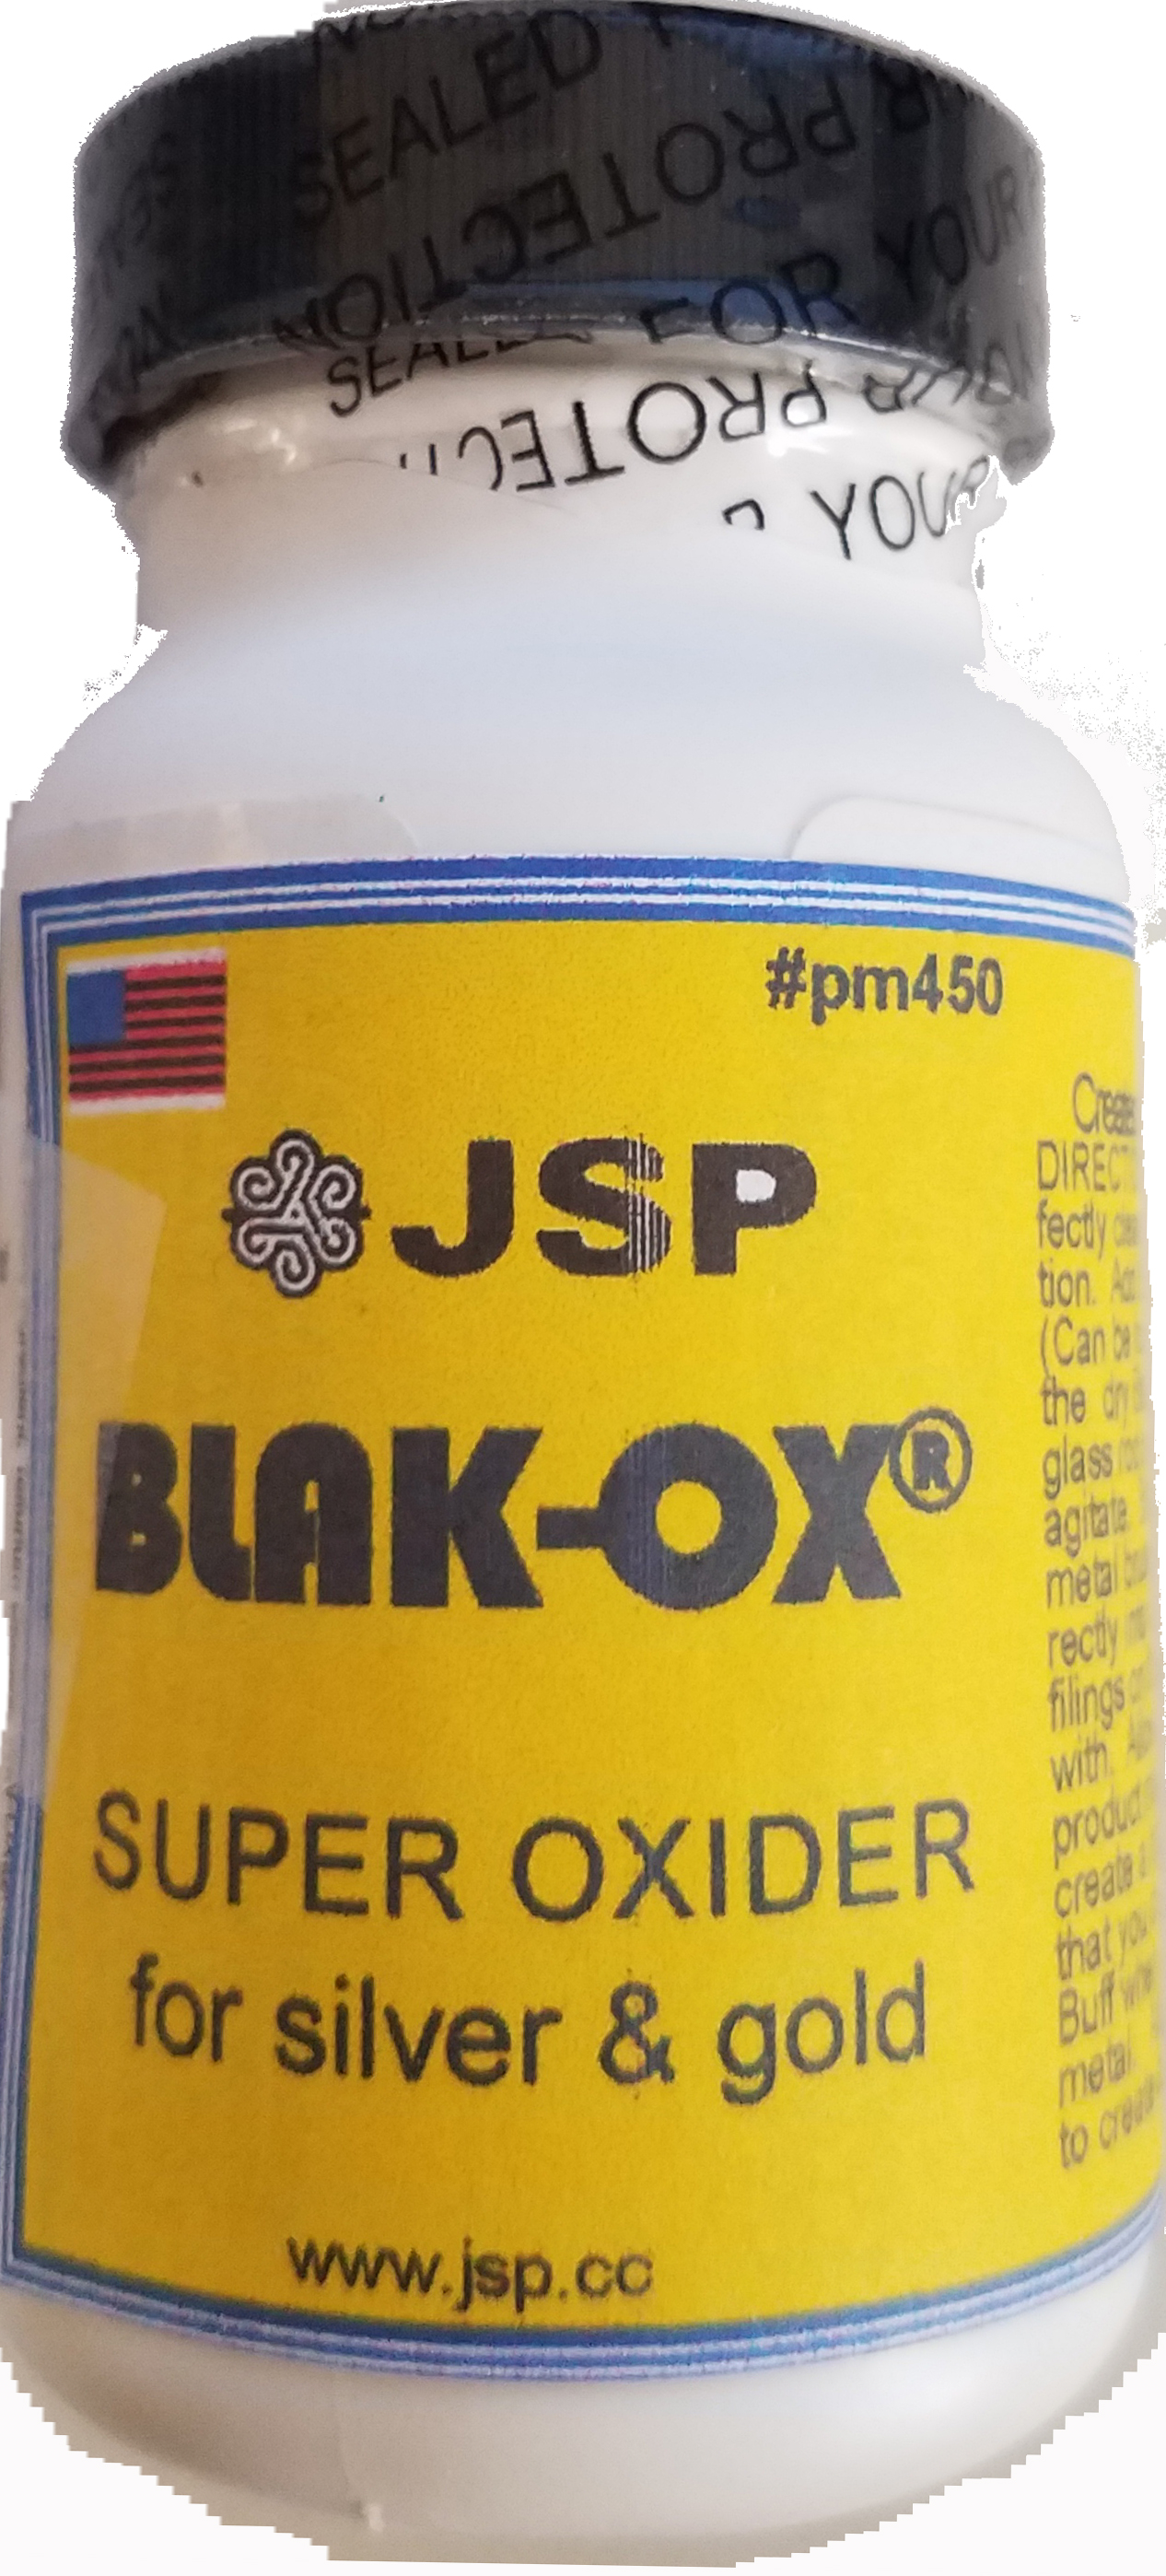 BLAK-OX® silver/gold oxidizer (safe to ship) 3 oz - Click Image to Close